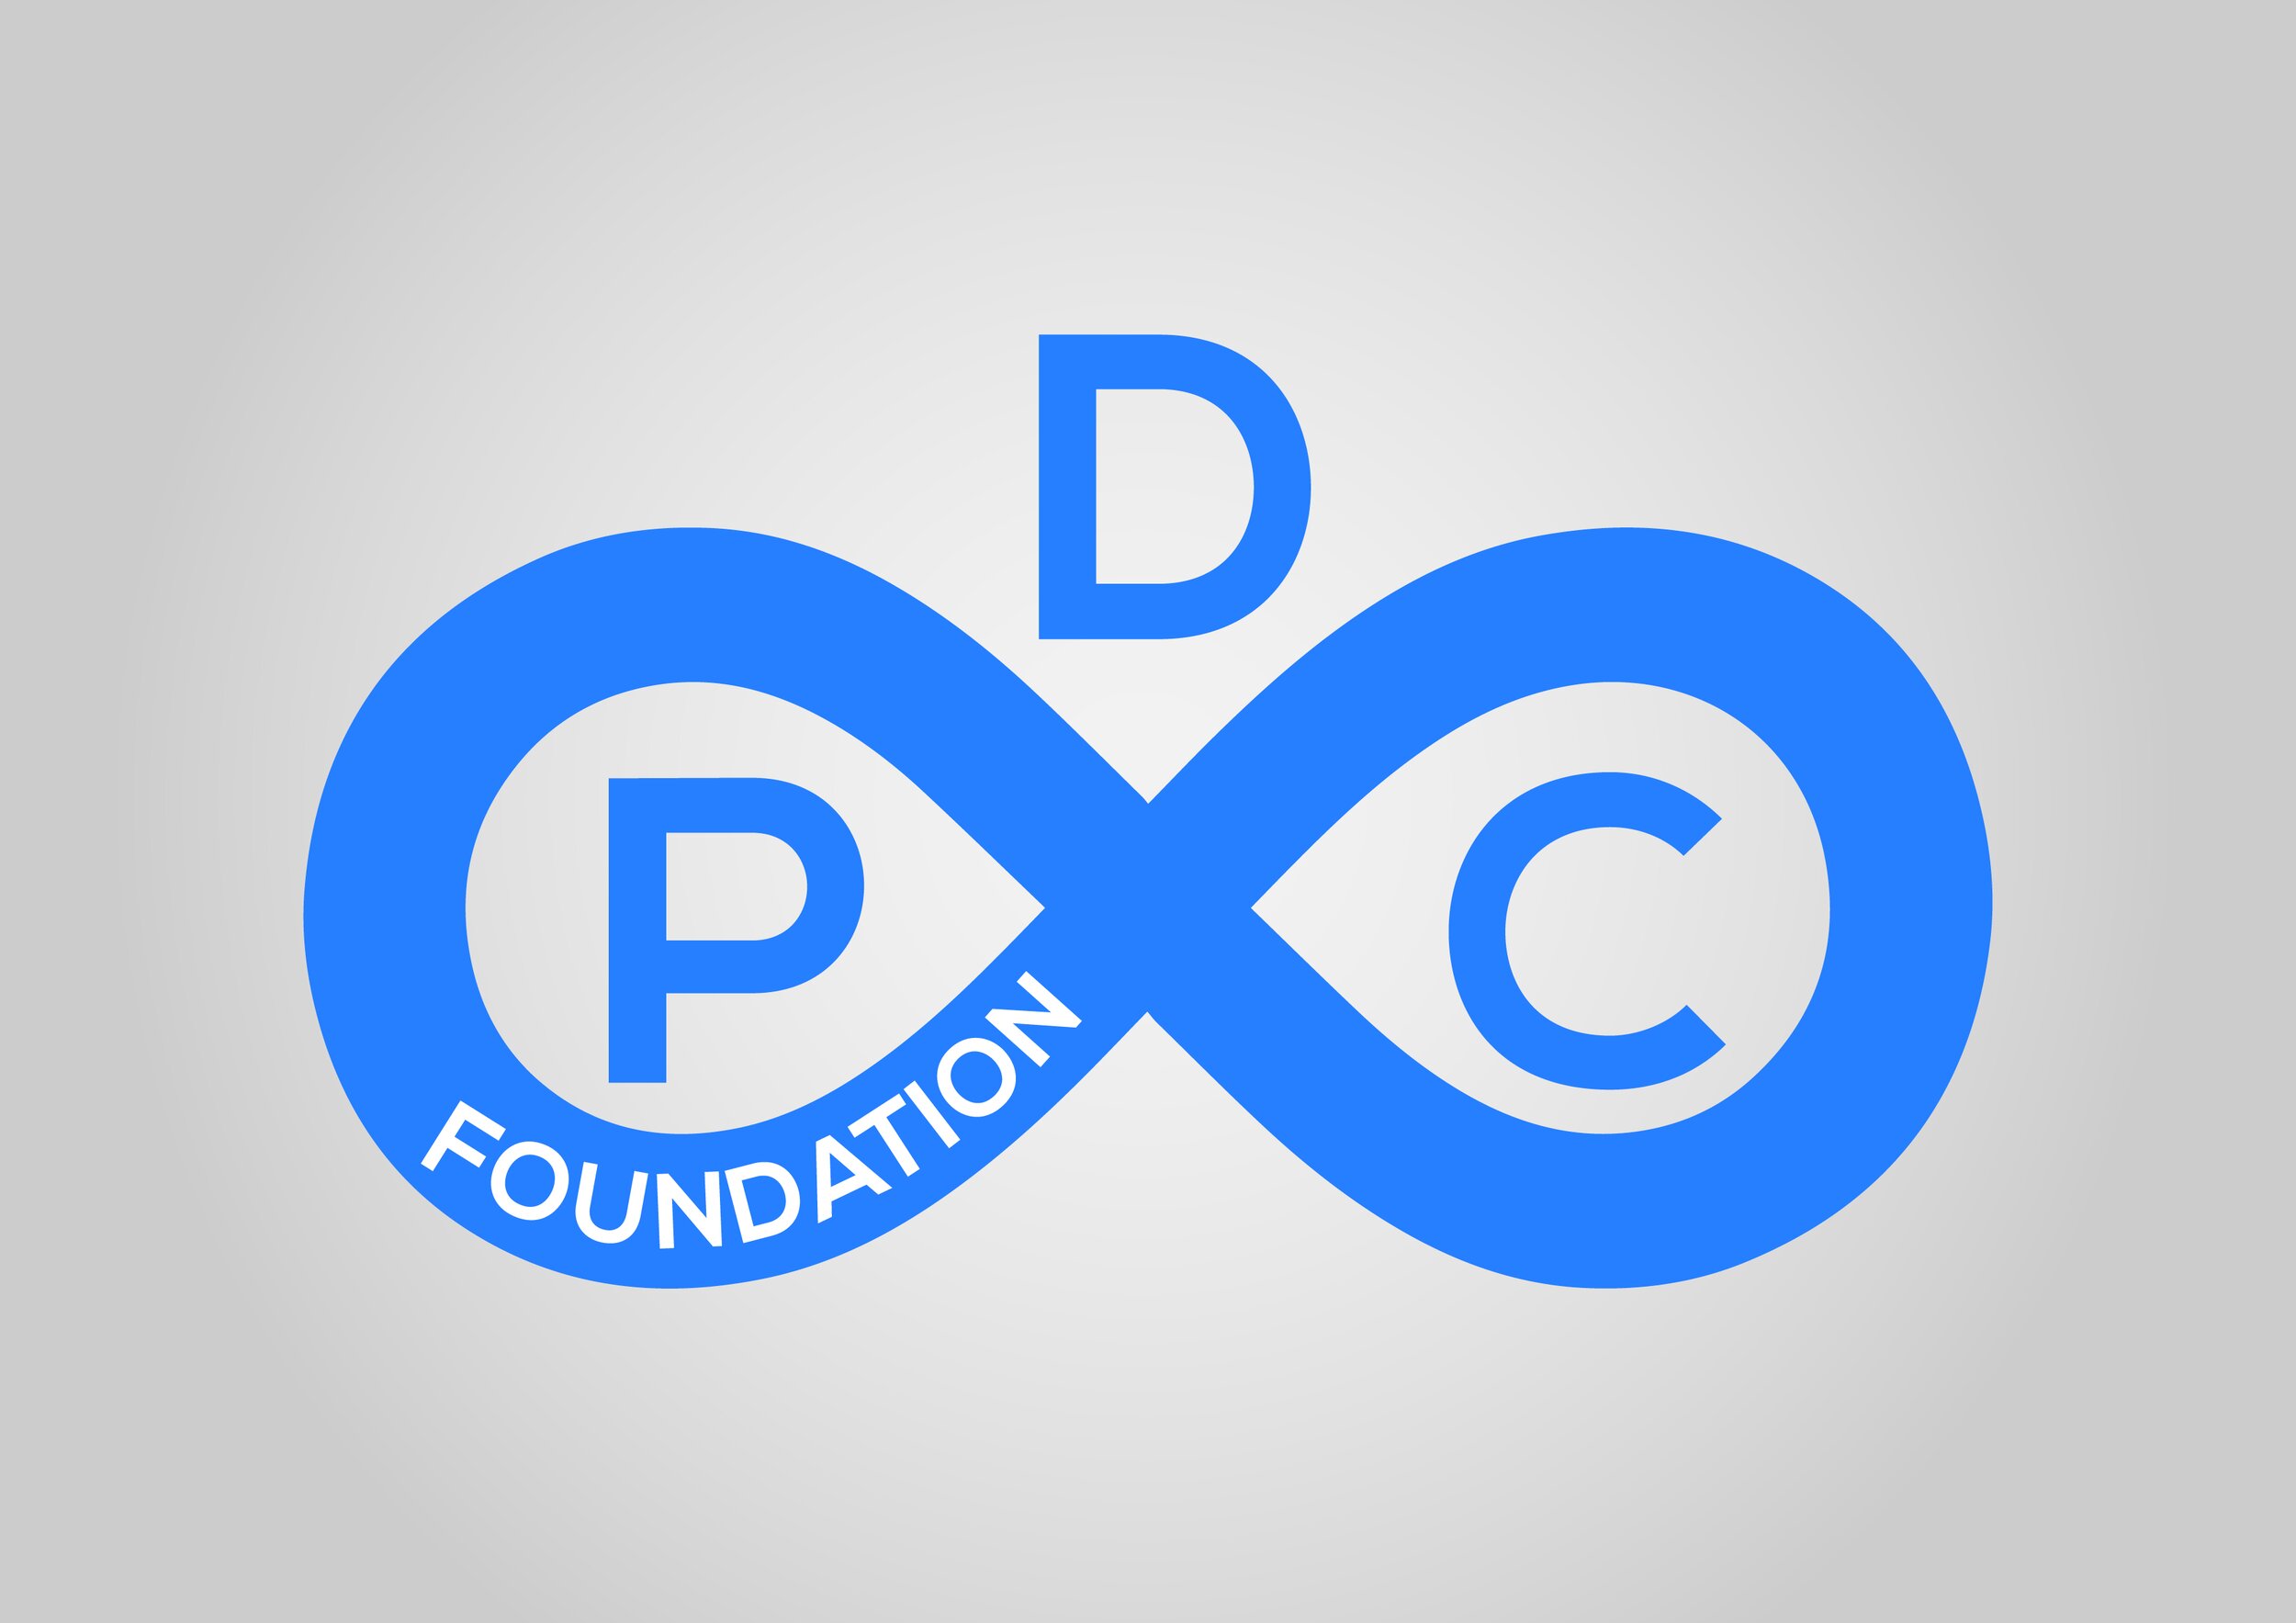 PCD_Foundation01 (1).jpg